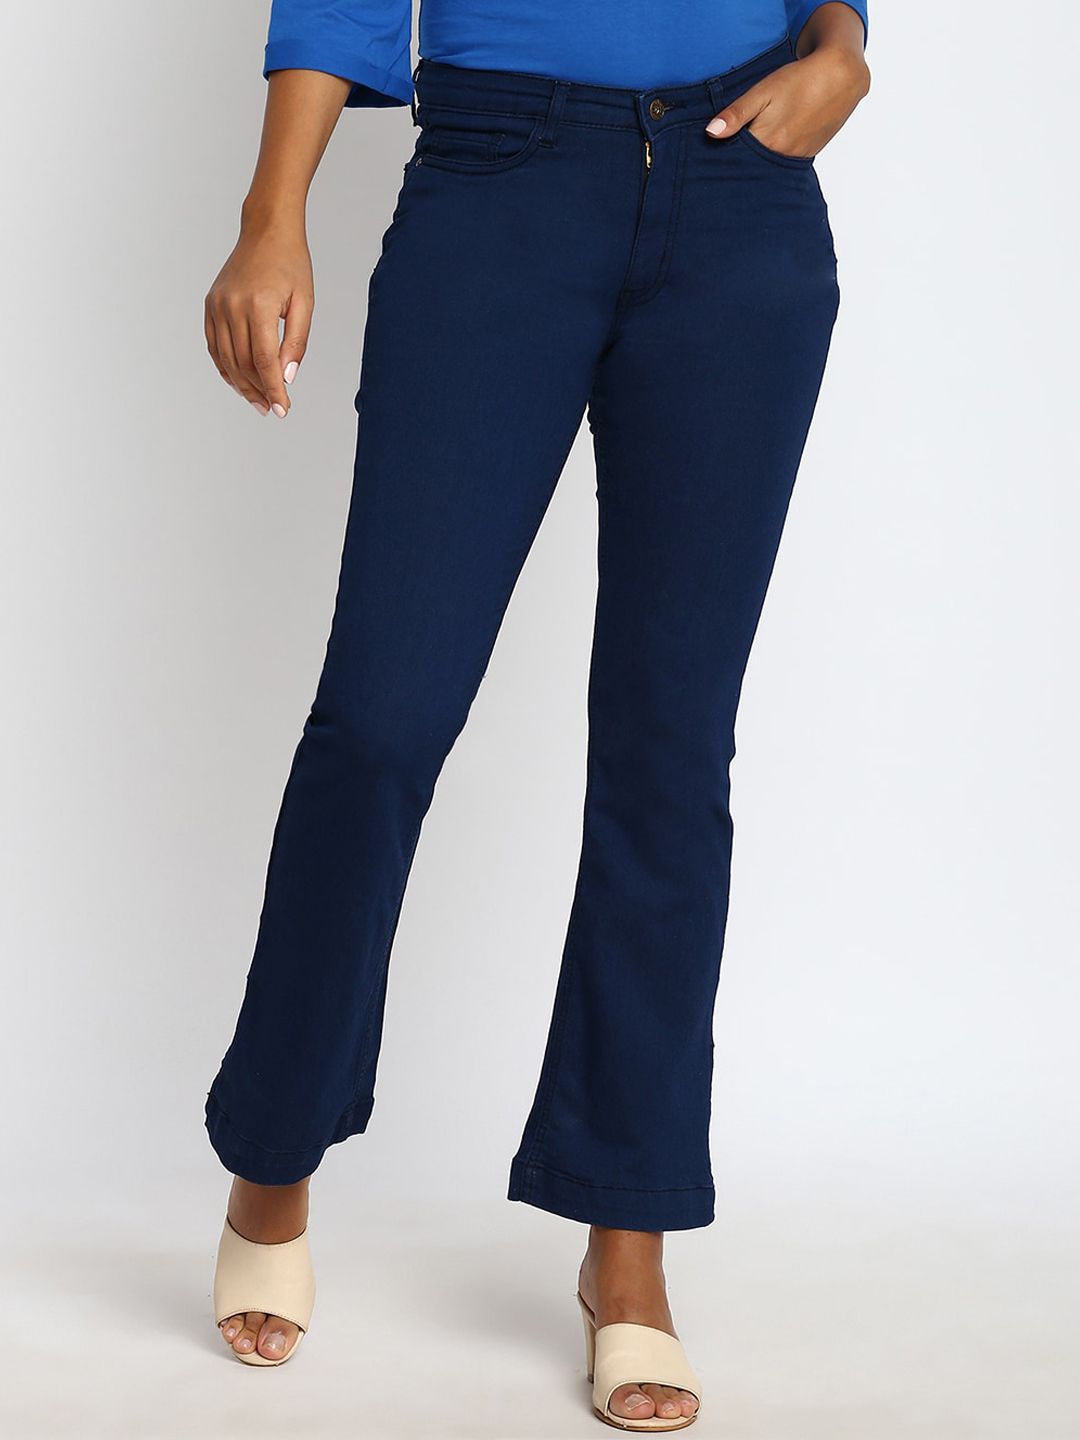 abof Women Blue Slim Fit Jeans Price in India